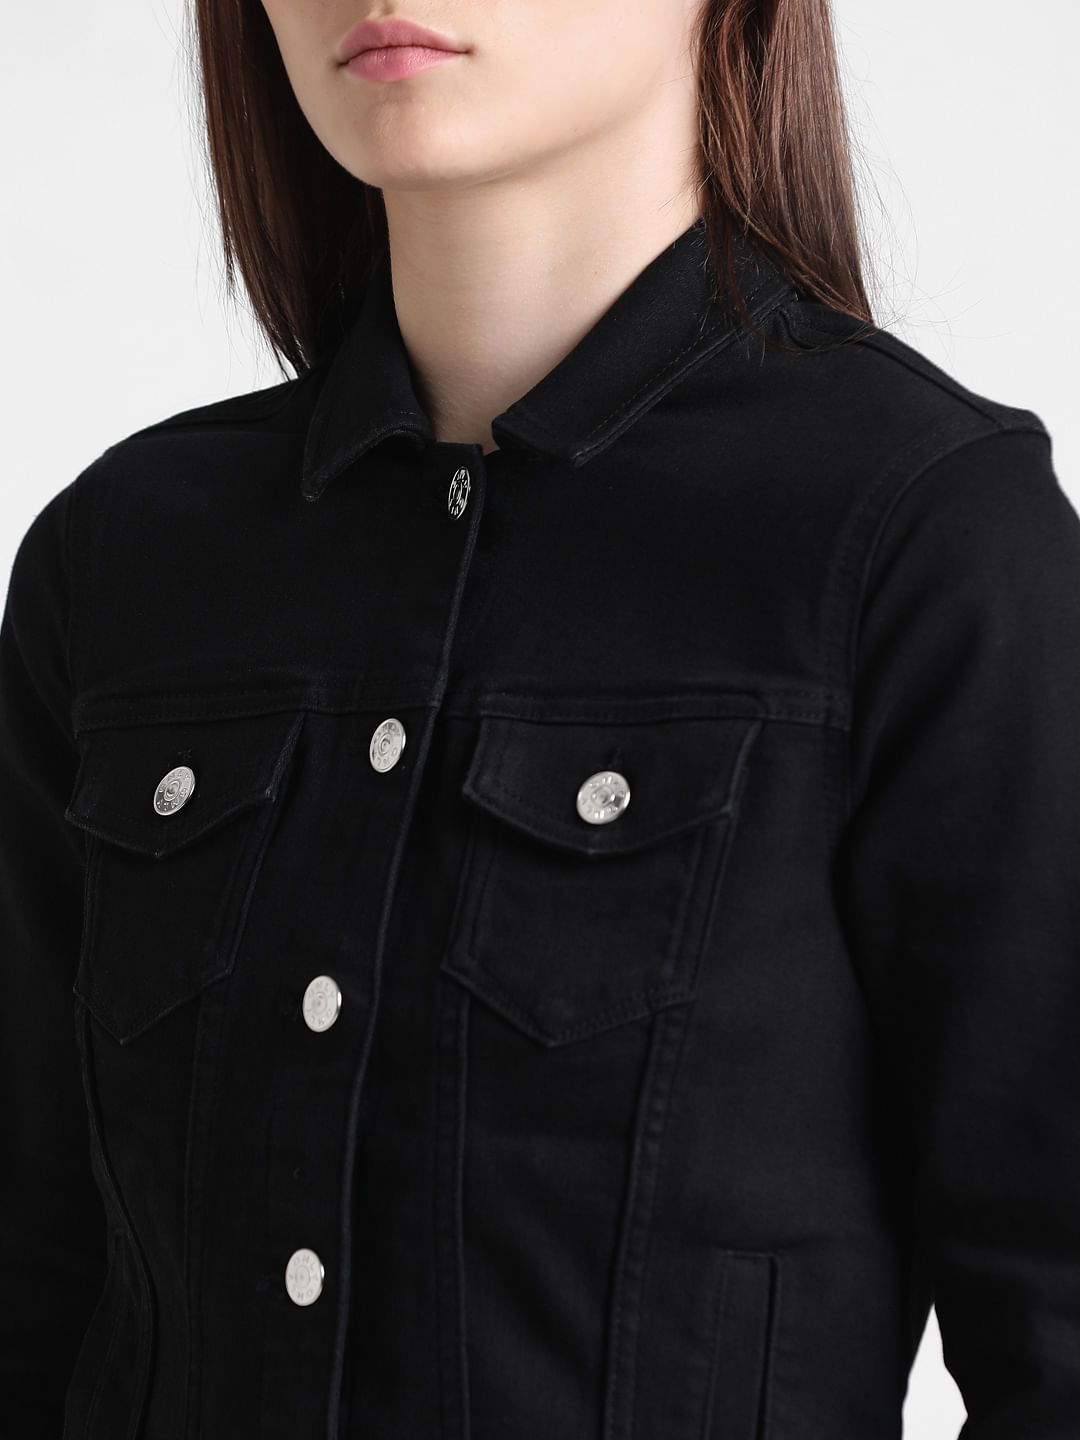 Women's Blue Denim Jacket, Black Crew-neck T-shirt, Black Skinny Jeans,  Black Leather Oxford Shoes | Lookastic